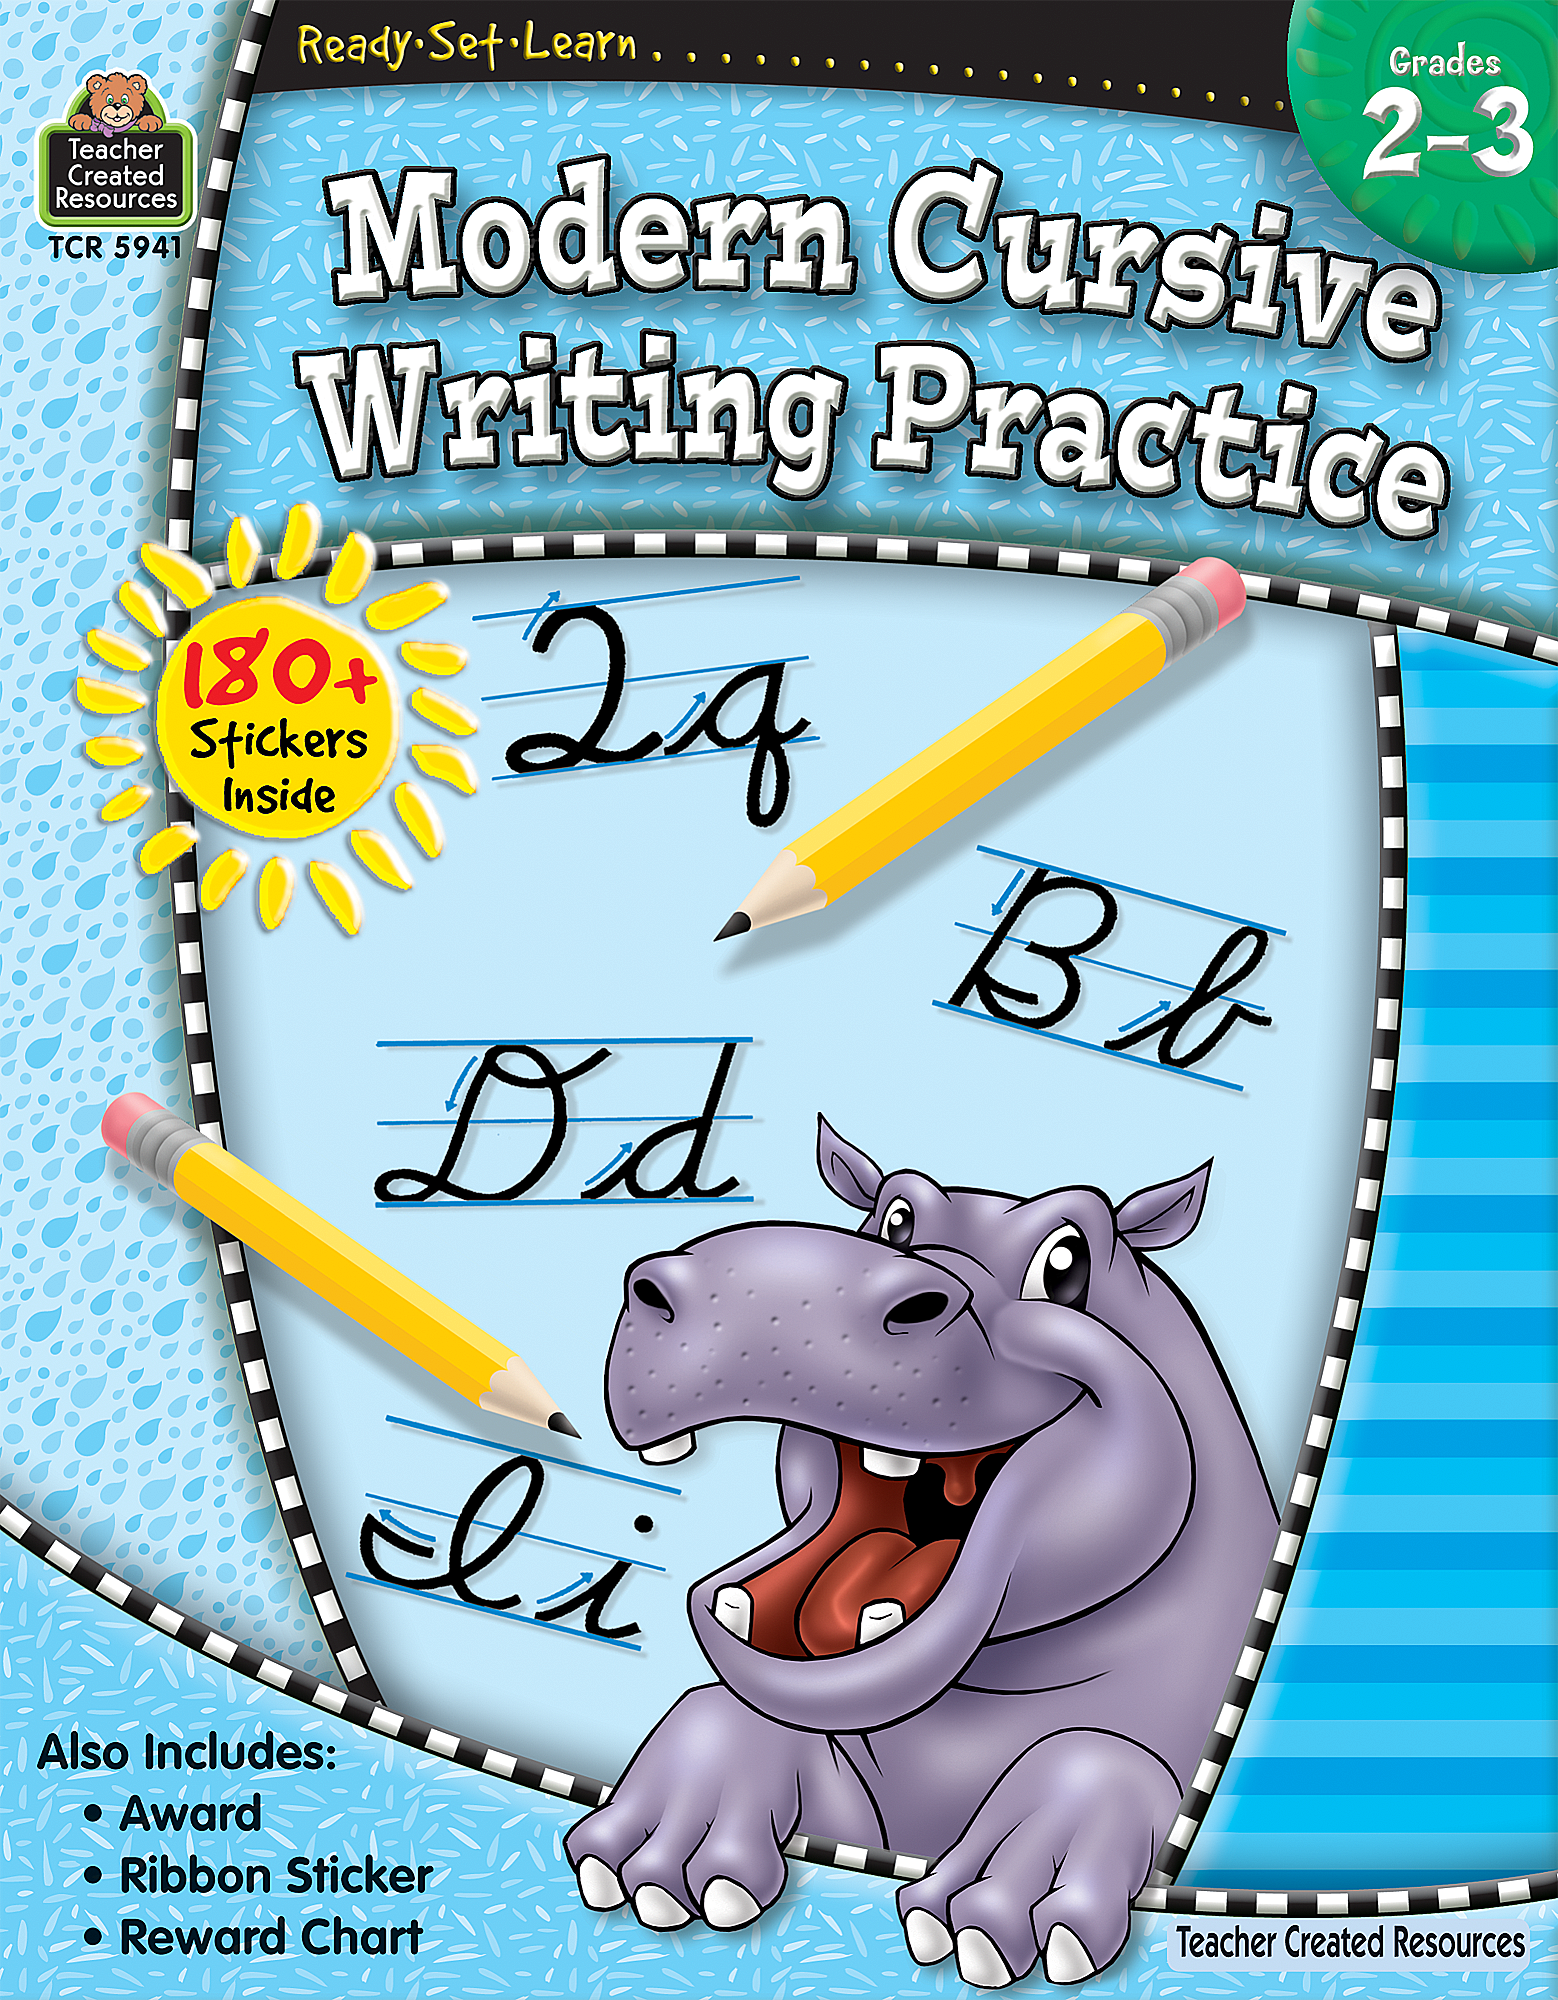 Ready-Set-Learn: Modern Cursive Writing Practice Grade 2-3 - TCR5941